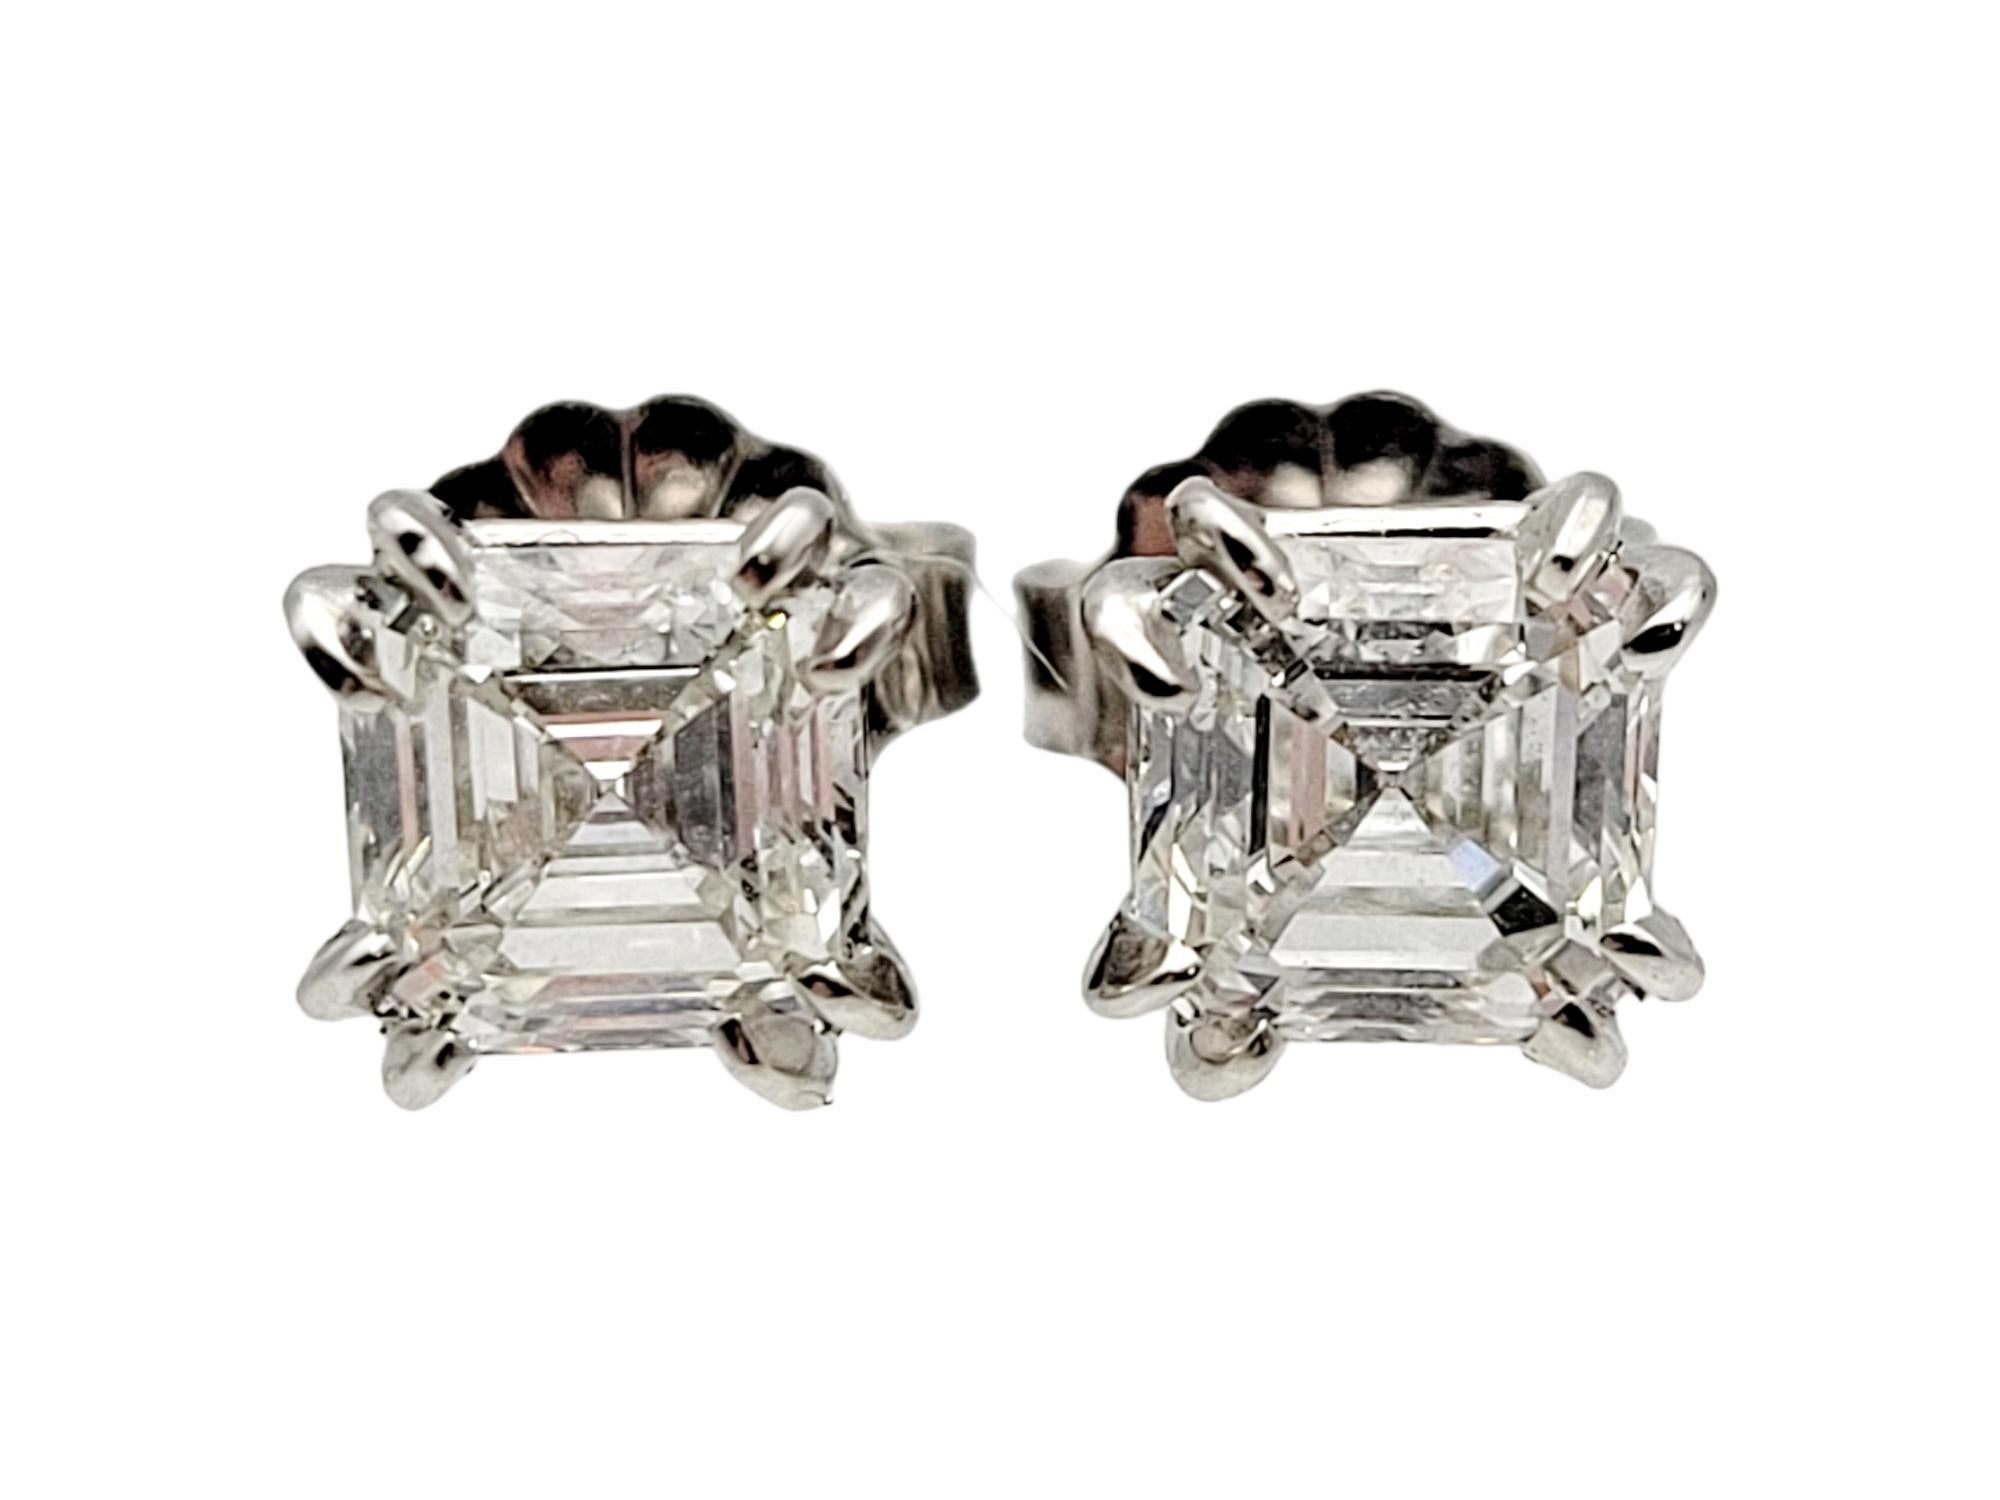 Contemporain 1.41 Carats Total Emerald Cut Solitaire Diamond Stud Earrings White Gold GIA en vente